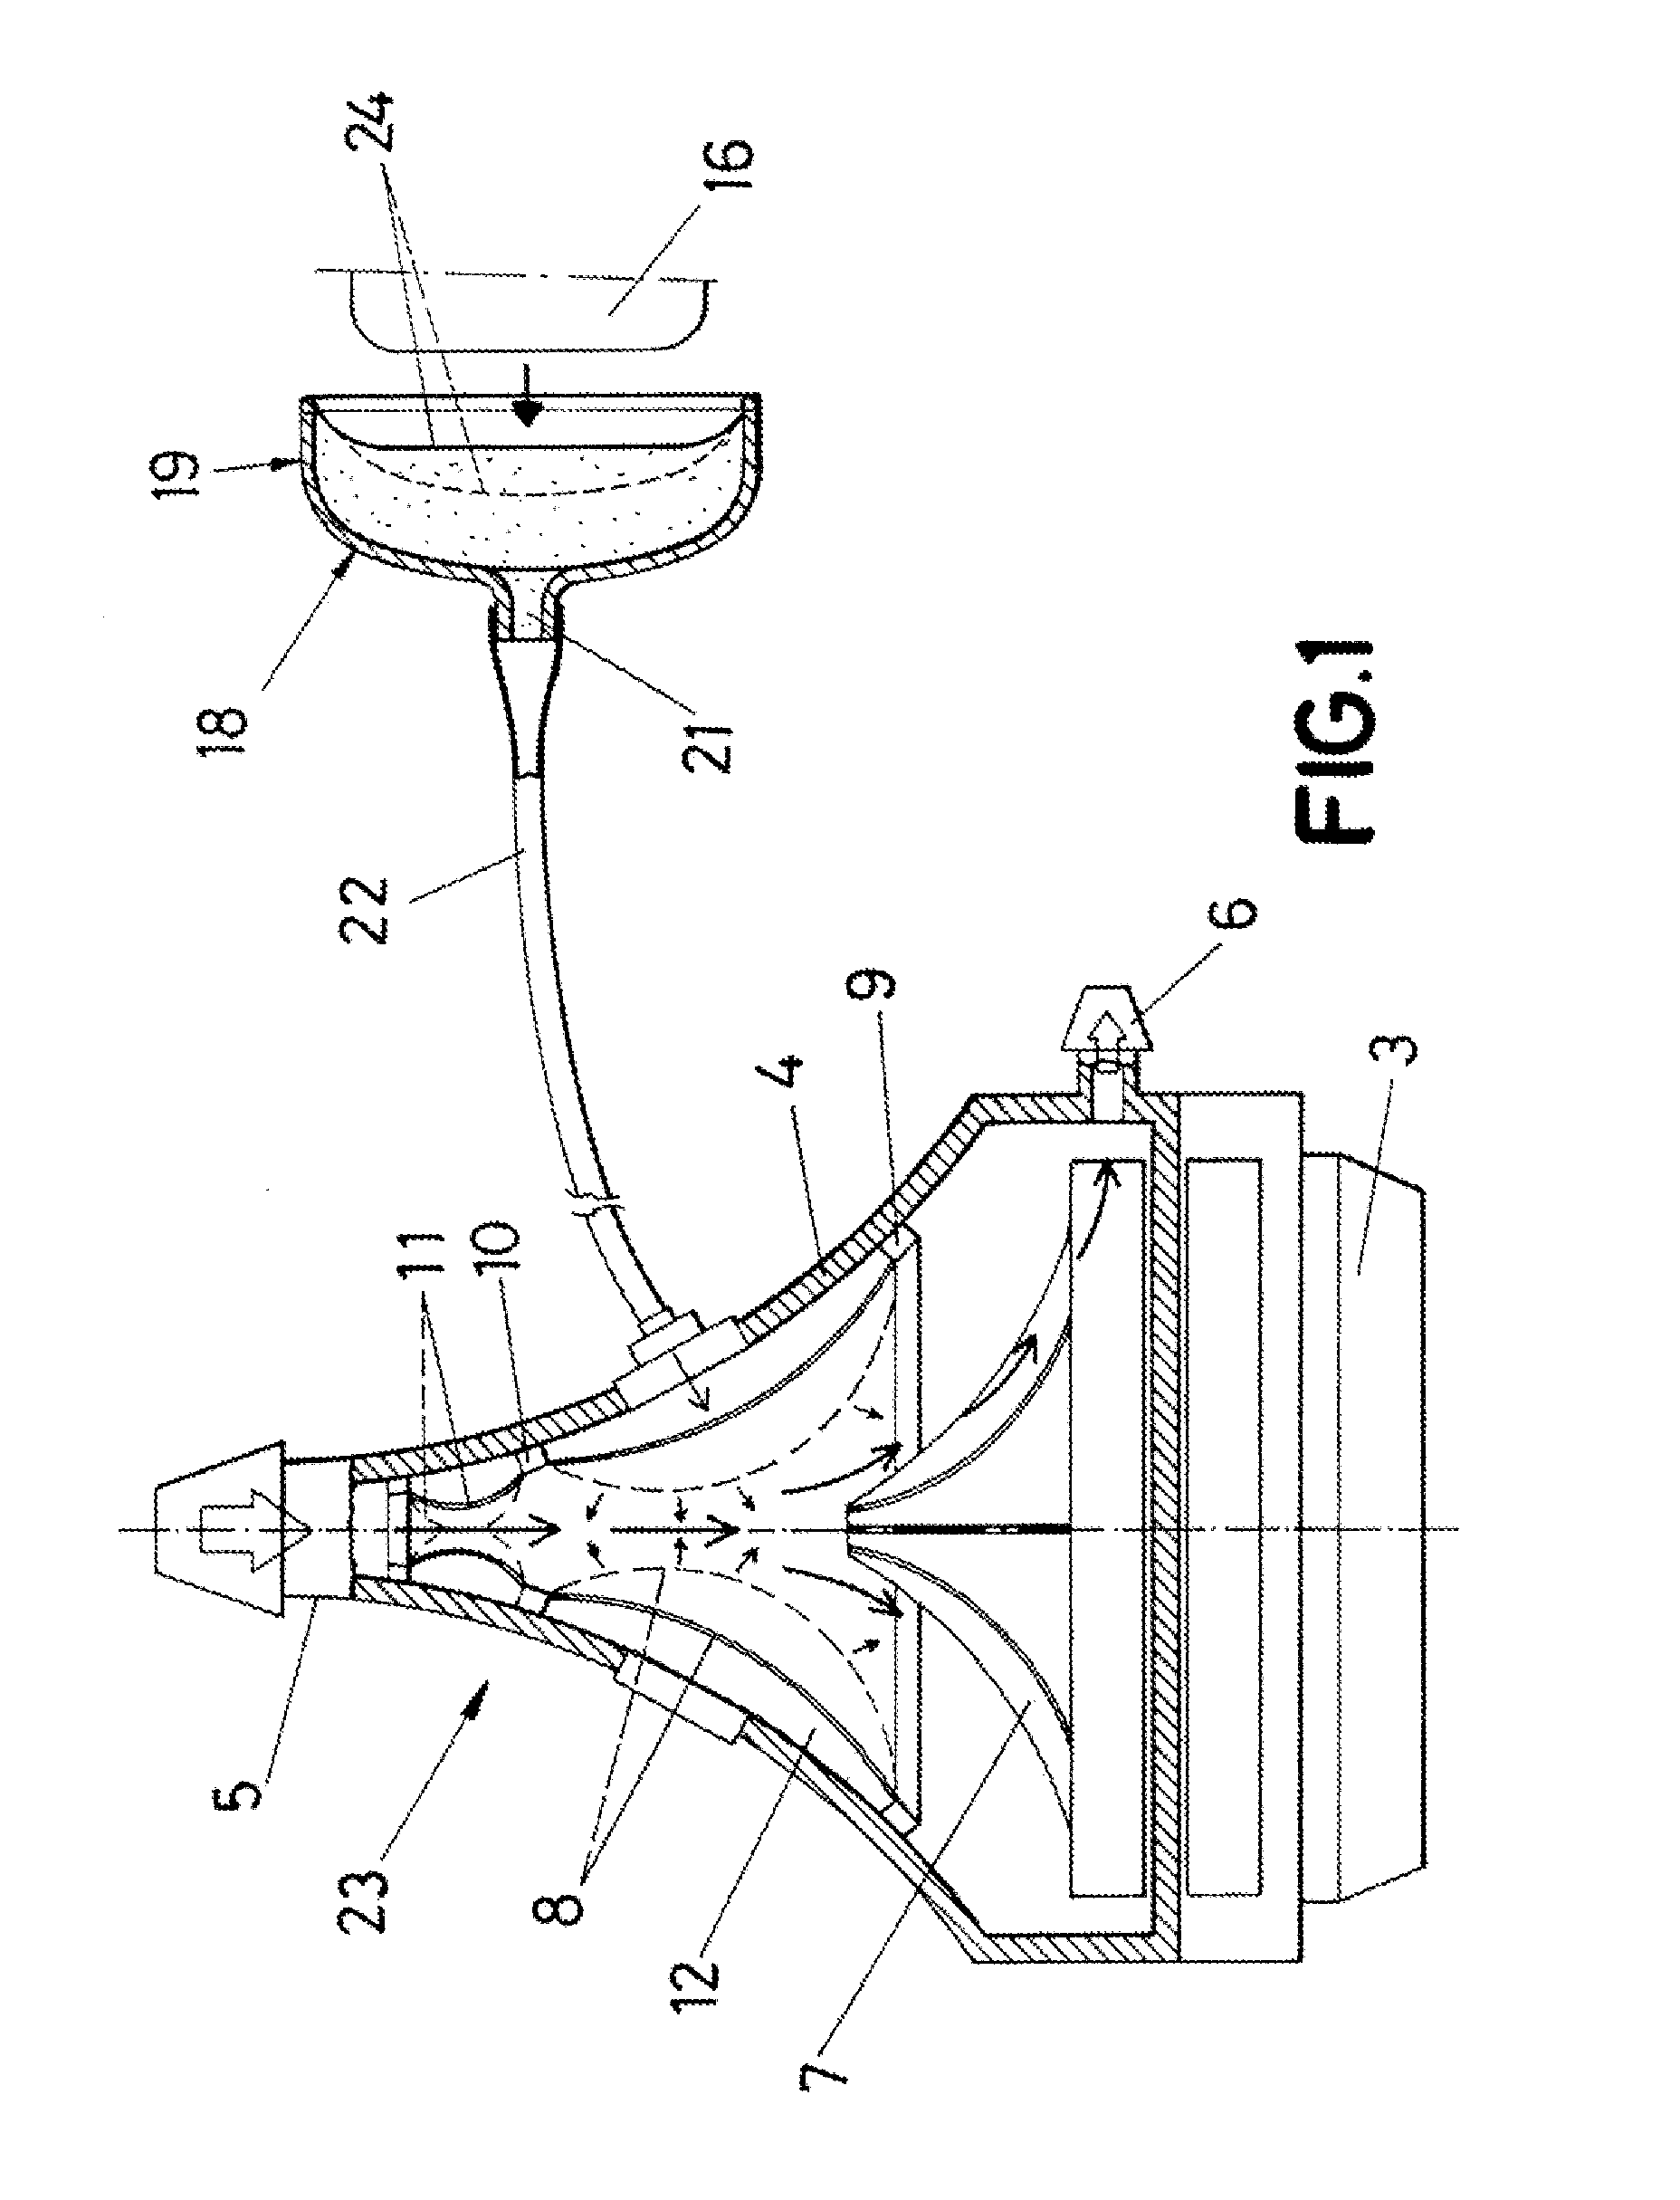 Hydraulic hydraulic pulsation equipment for a perfusion pump